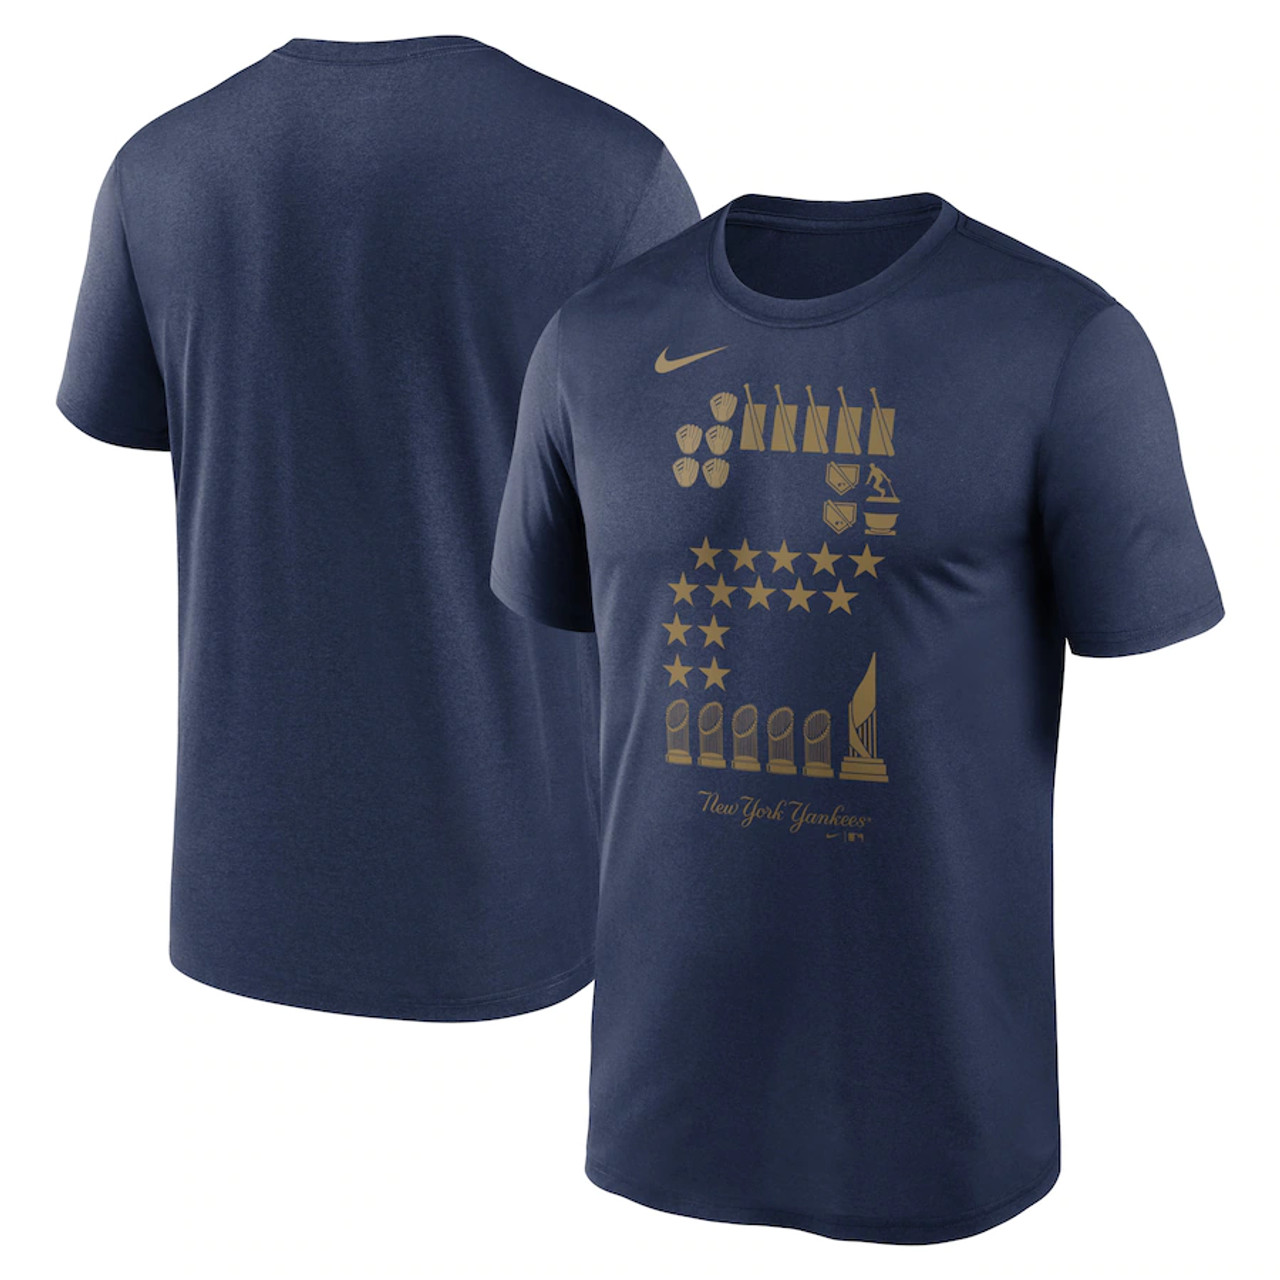 Derek Jeter Career Awards Dri-Fit T-Shirt - Navy NY Yankees Adult T-Shirt